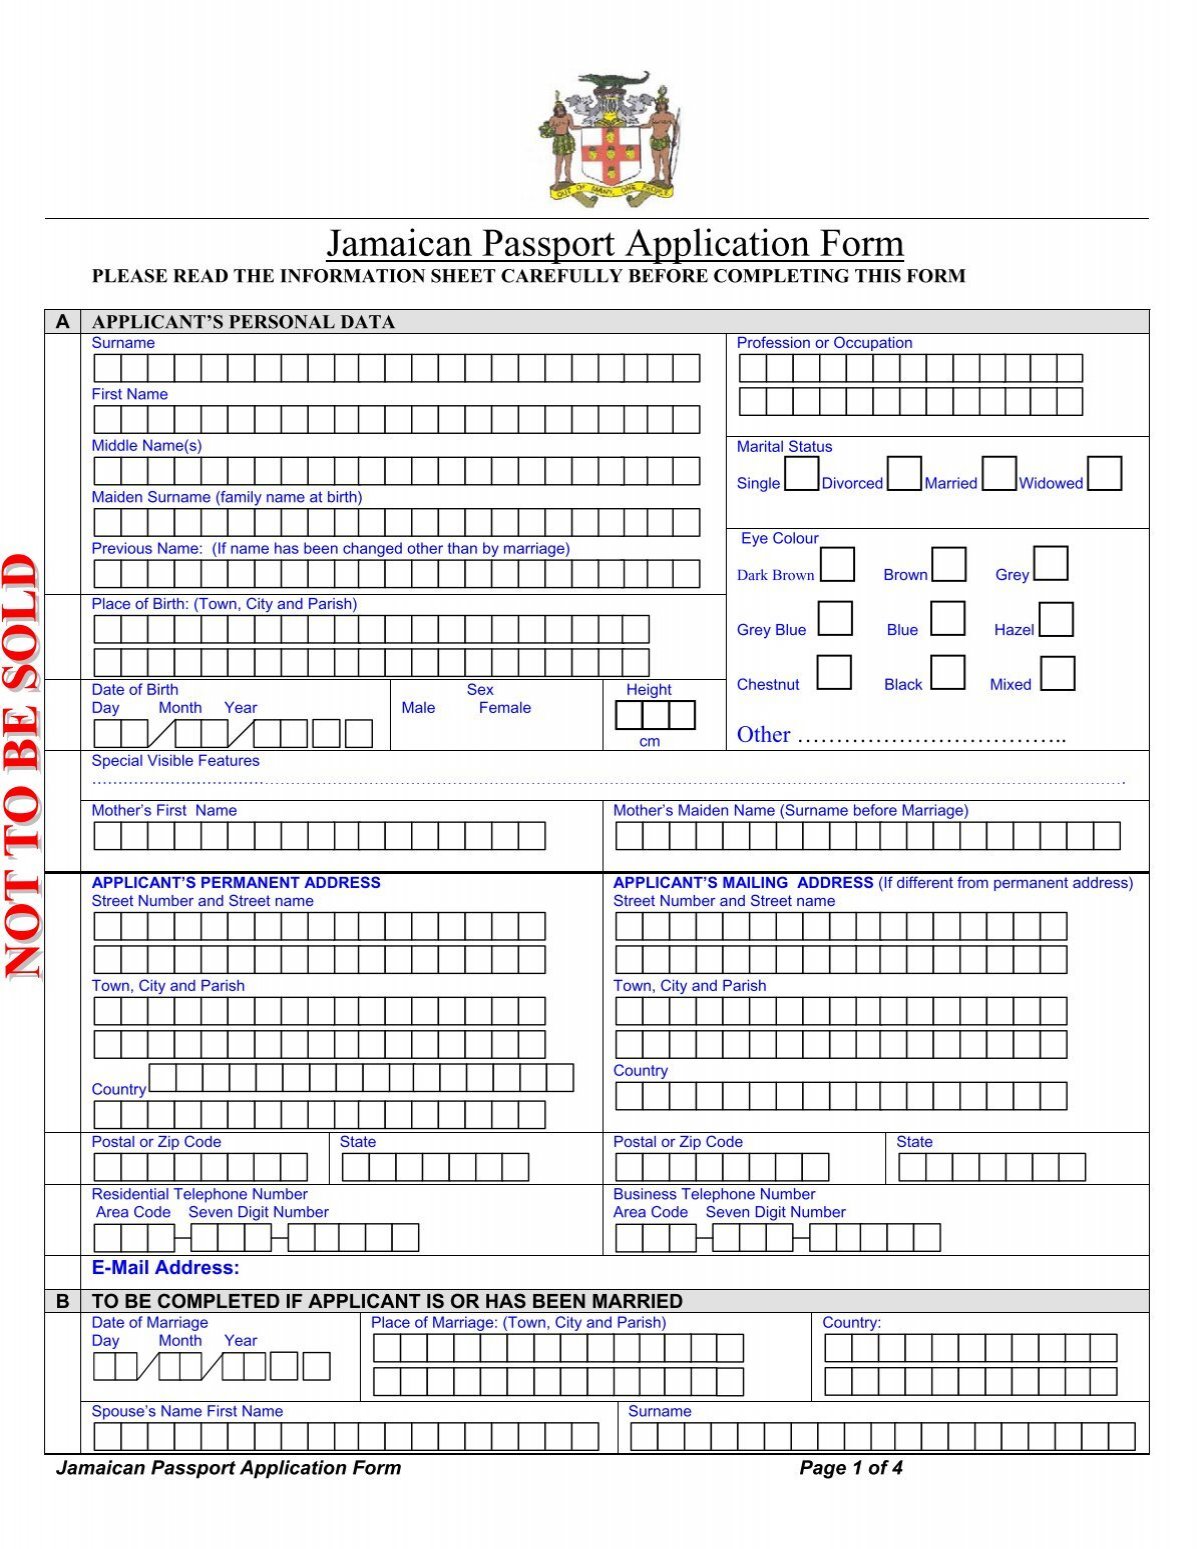 jamaica-passport-application-form